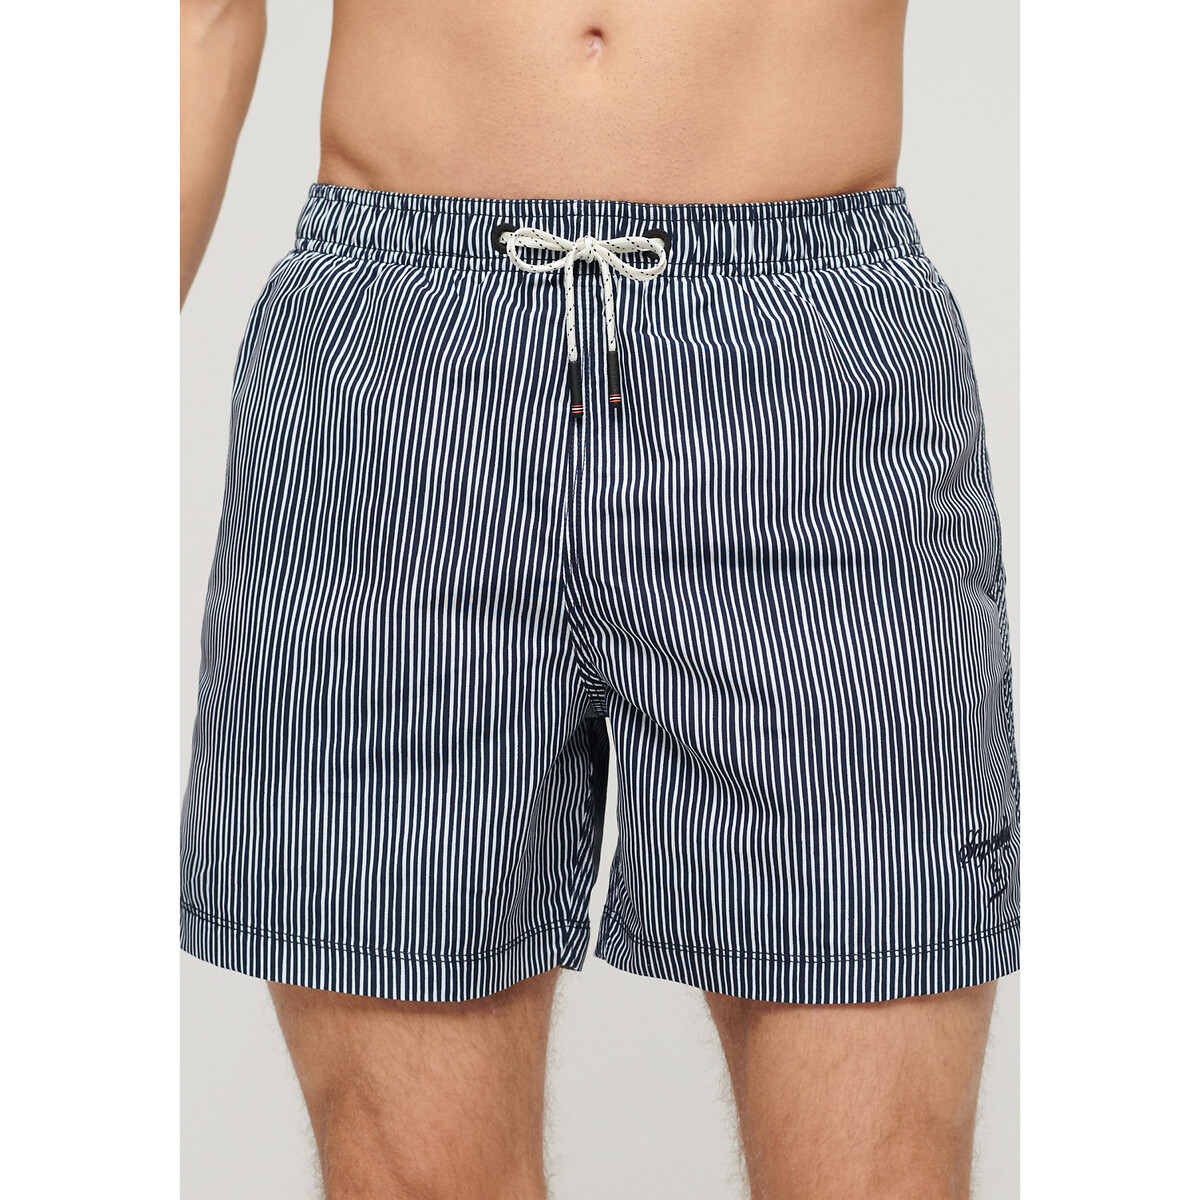 Image of Printed Swim Shorts, Length 38cm